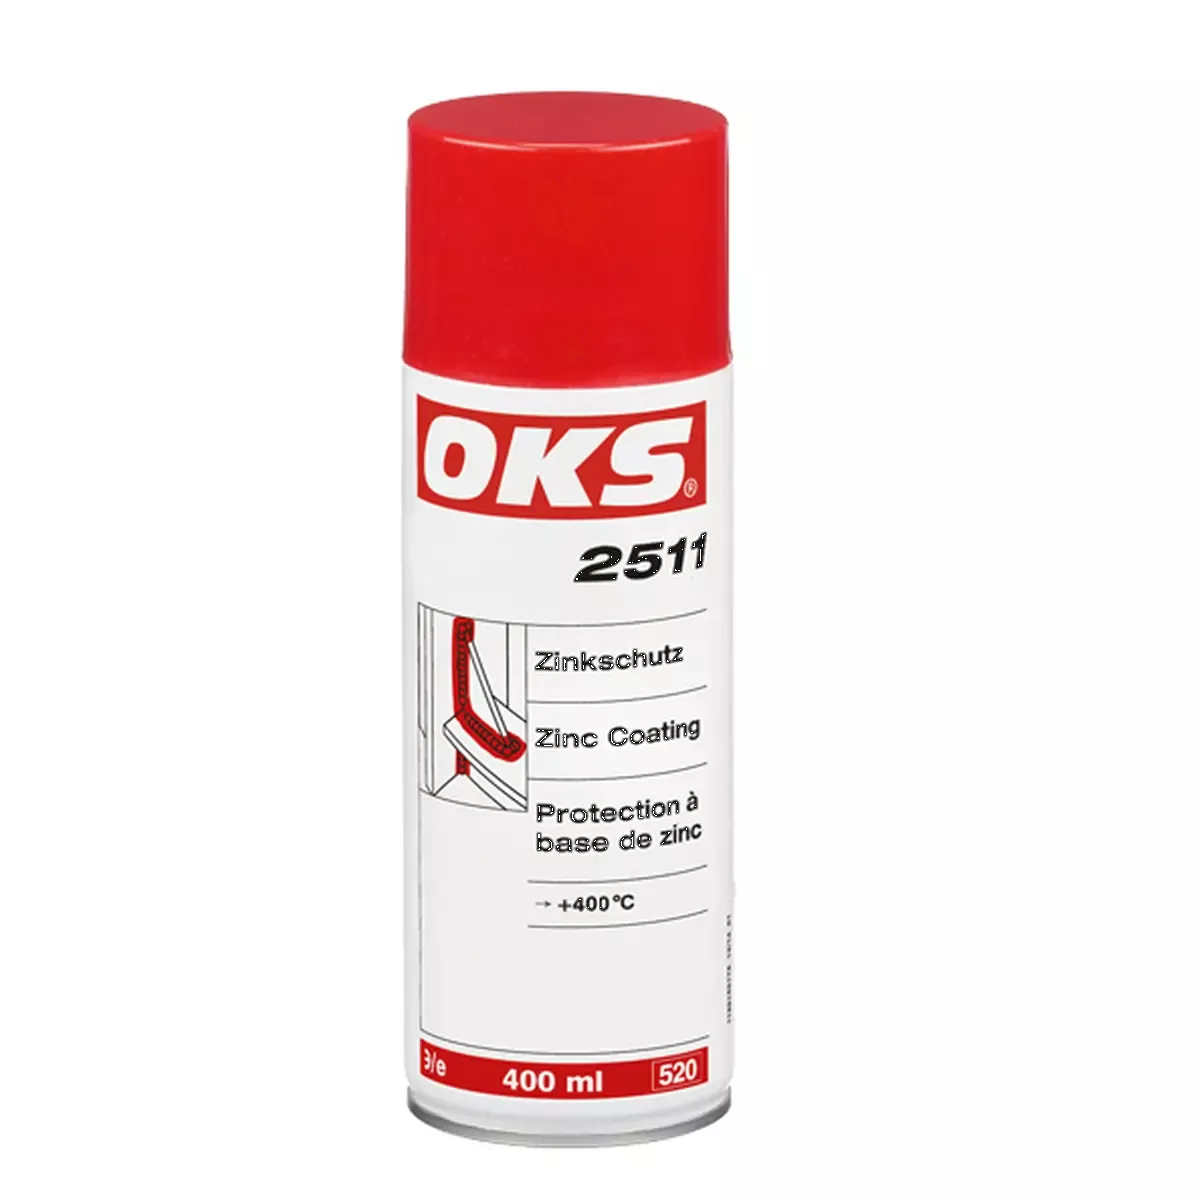 Betriebsmittel Zinkschutz OKS 2511 für Betriebsbedarf